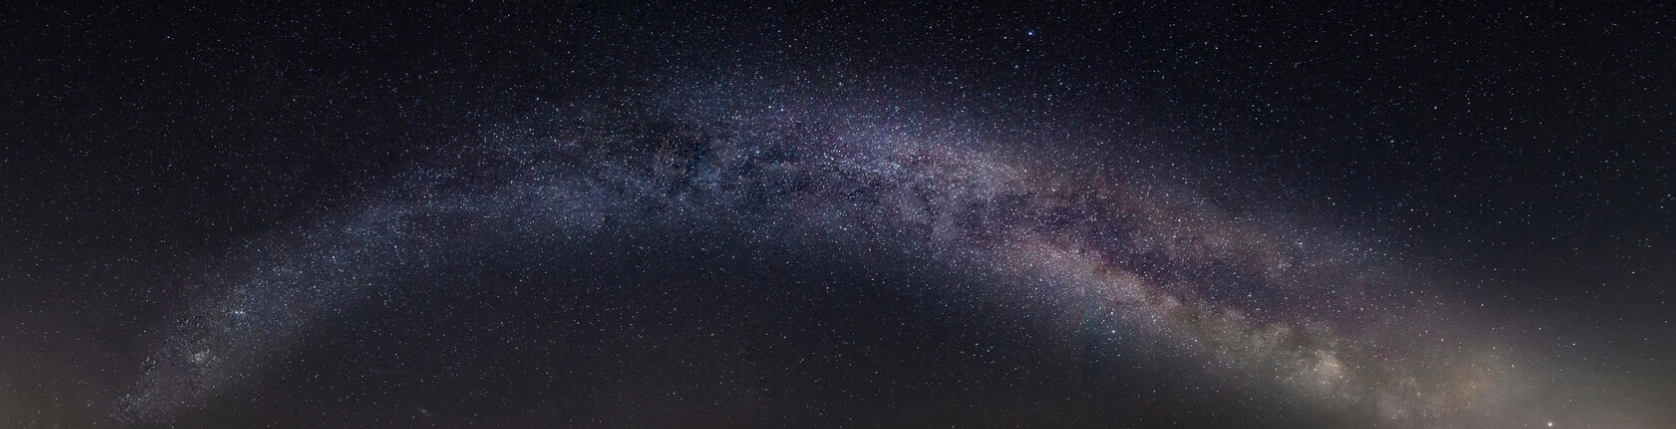 Steve Bell Milky Way night sky